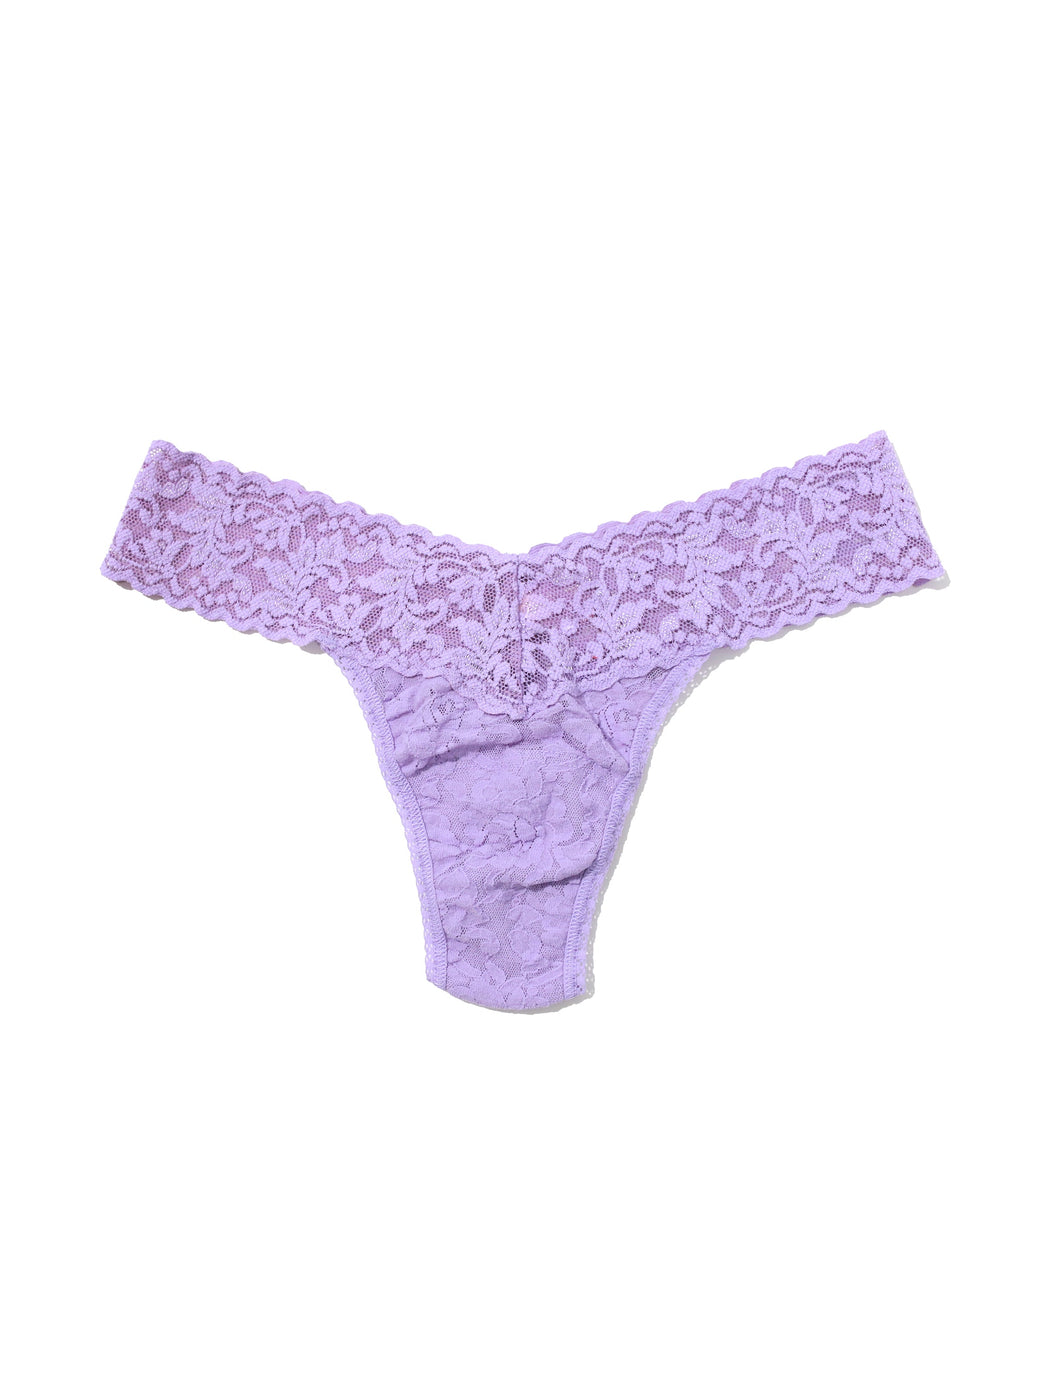 Petite Size Signature Lace Low Rise Thong Wisteria Purple